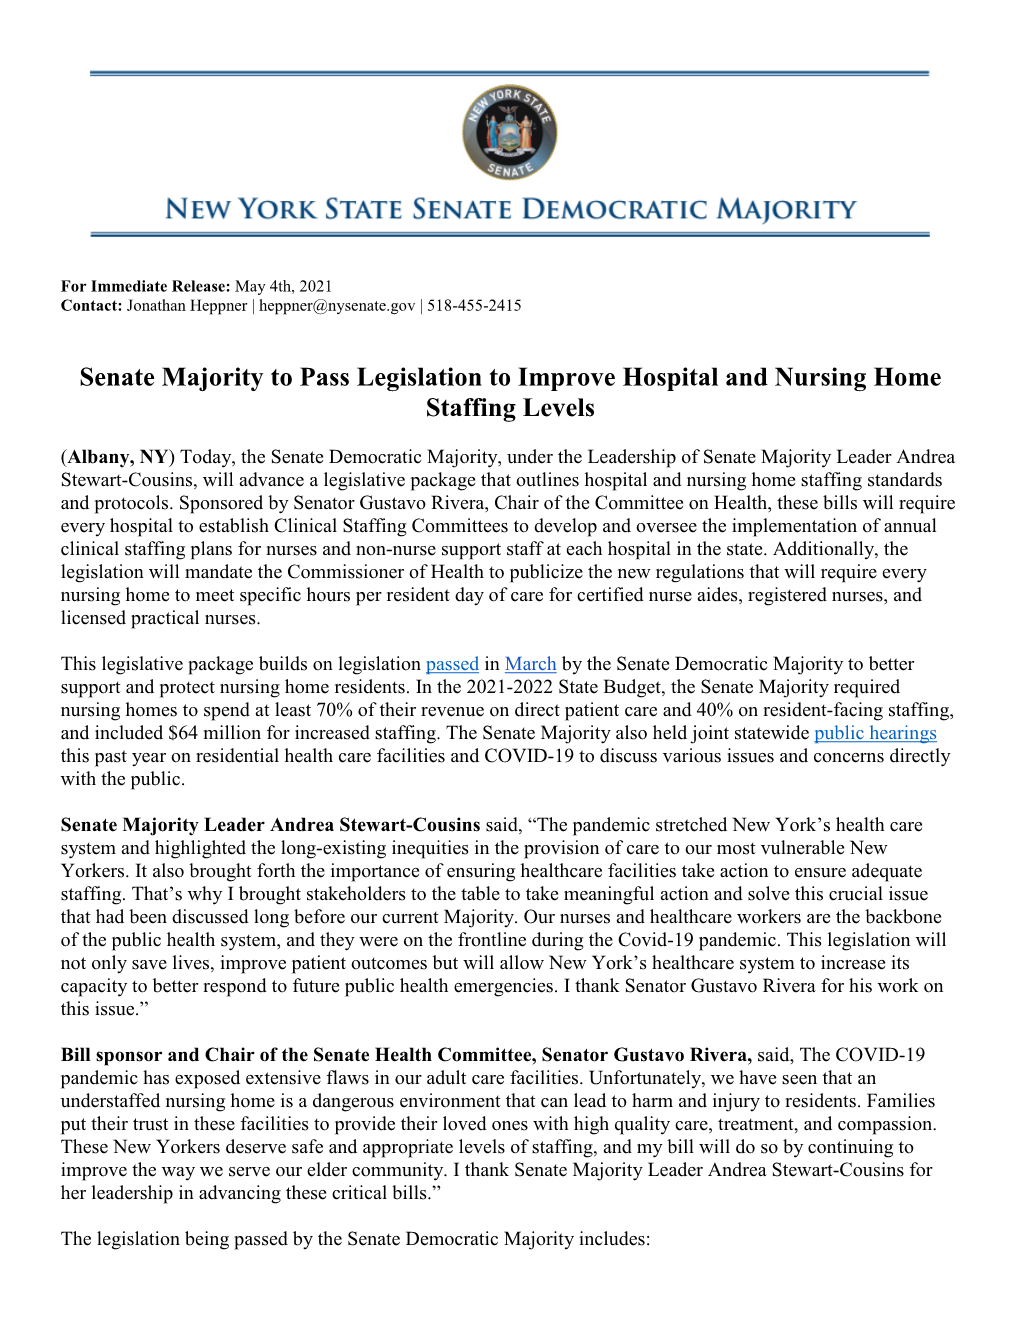 Senate Majority to Pass Legislation to Improve Hospital and Nursing Home Staffing Levels